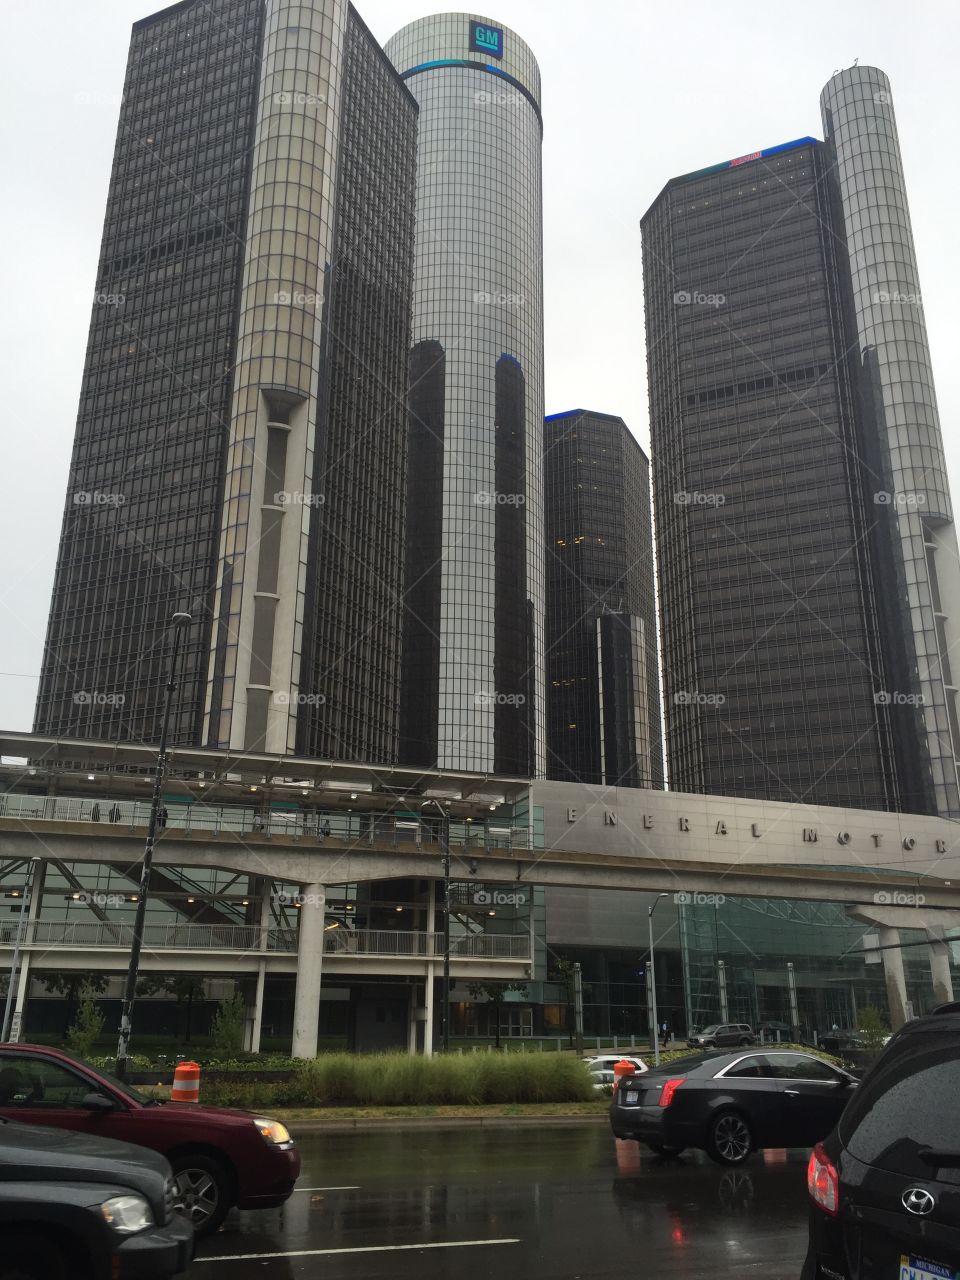 Ren-Cen. Detroit's tallest building. 